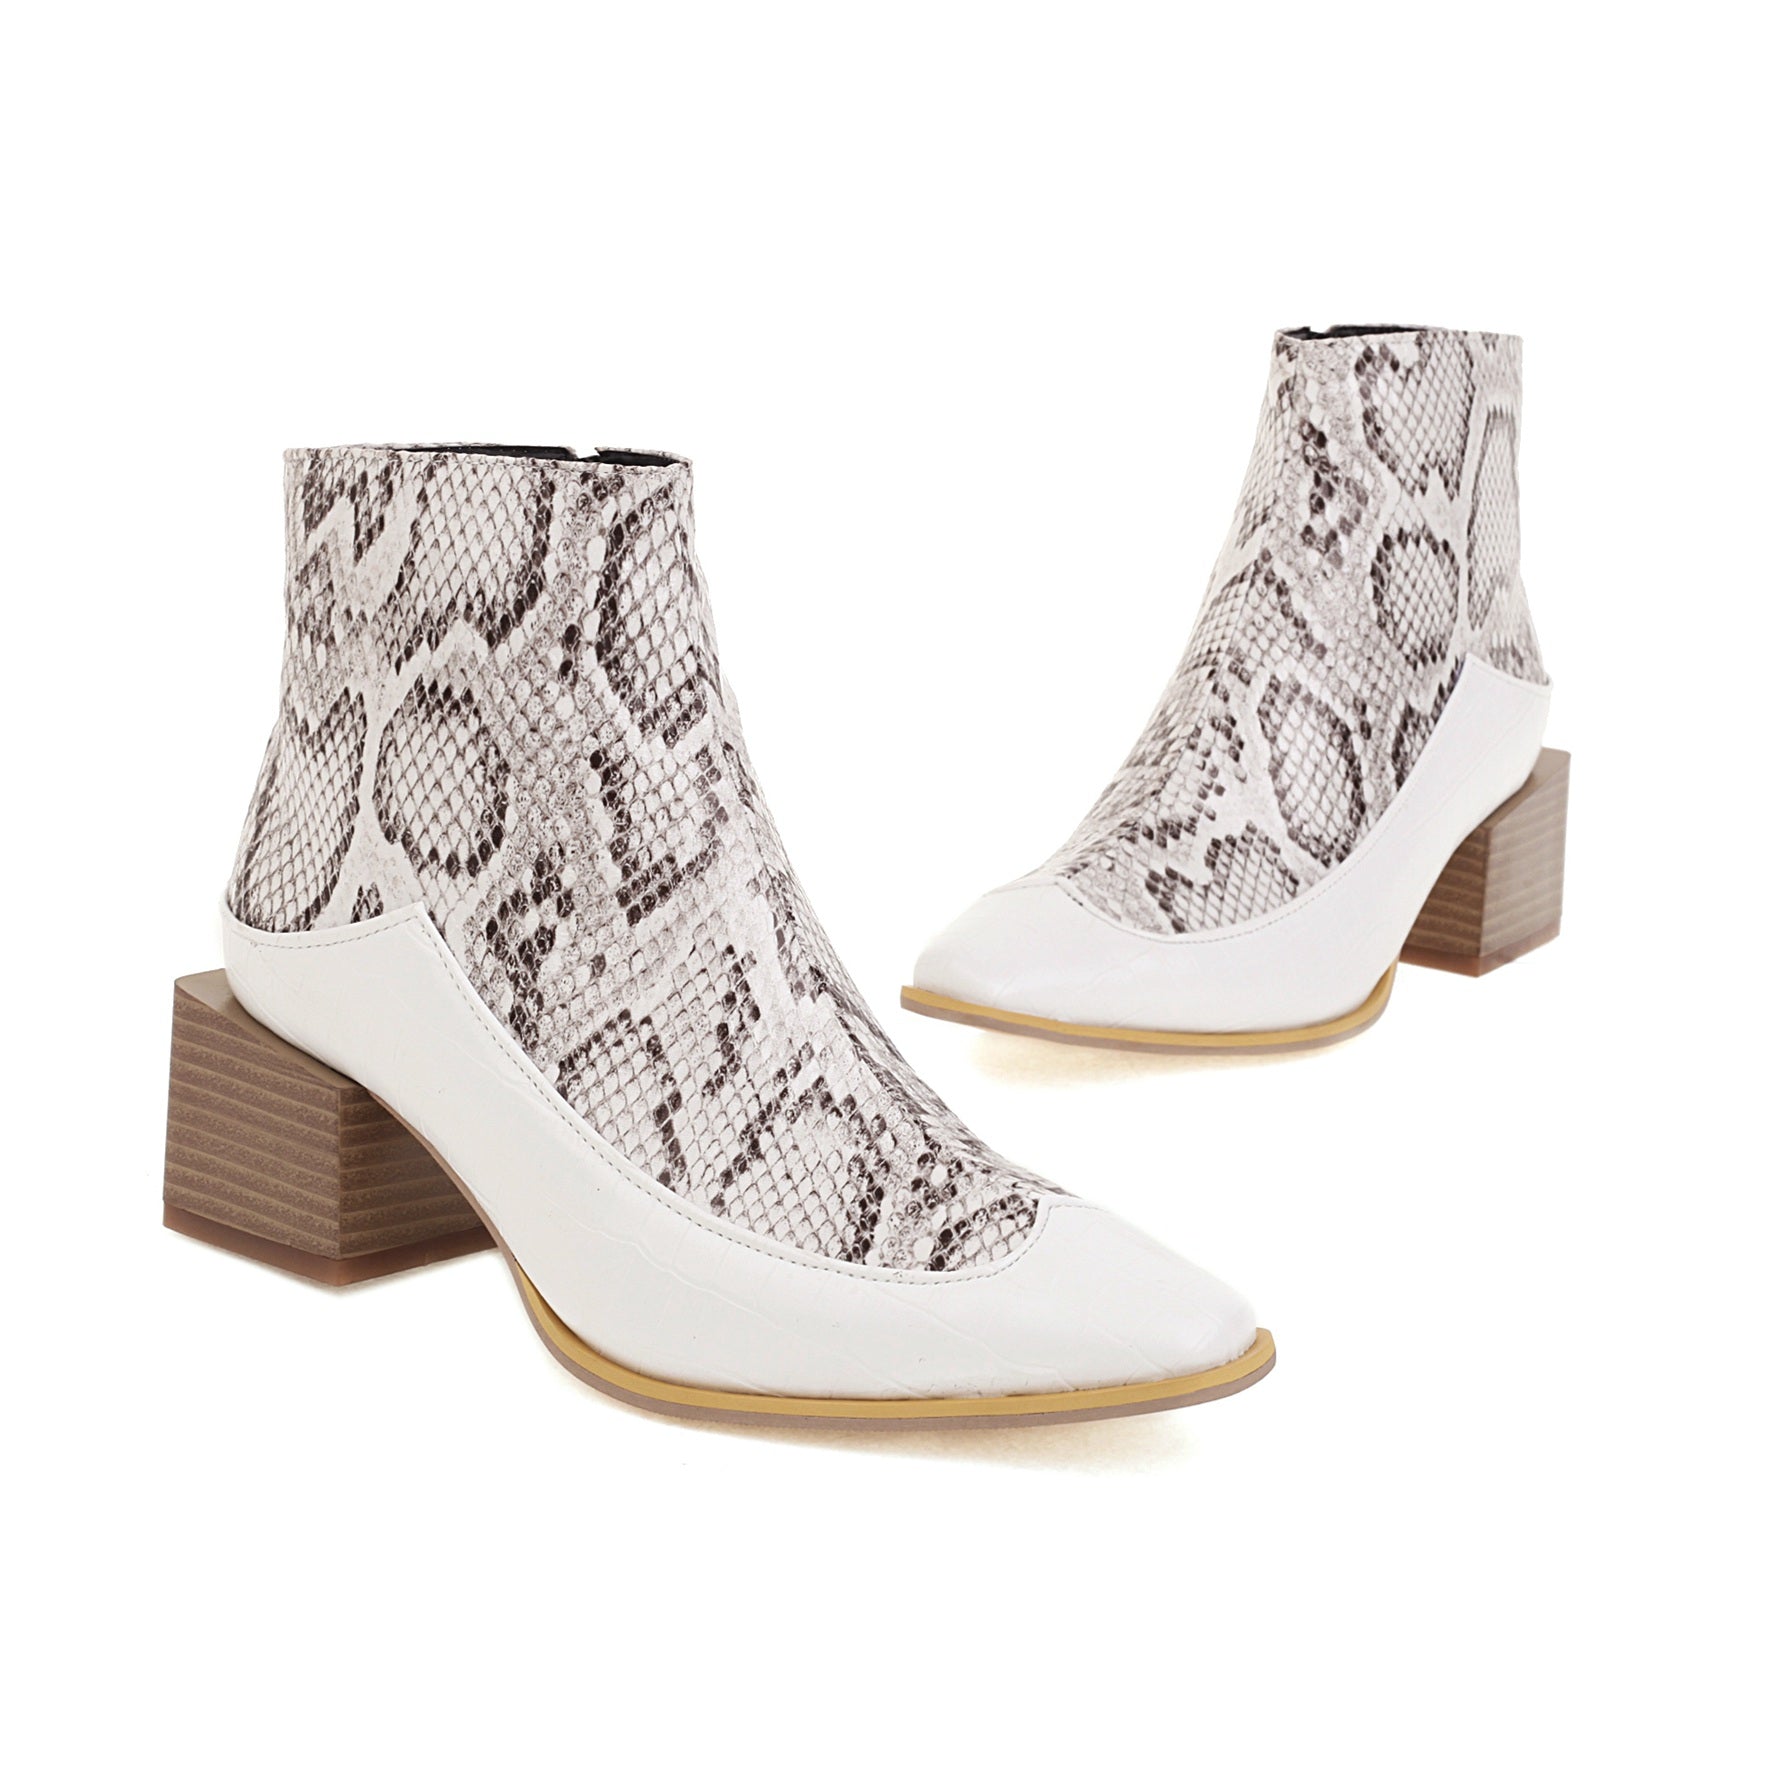 Bigsizeheels Stone pattern profiled heel ankle boots - White freeshipping - bigsizeheel®-size5-size15 -All Plus Sizes Available!